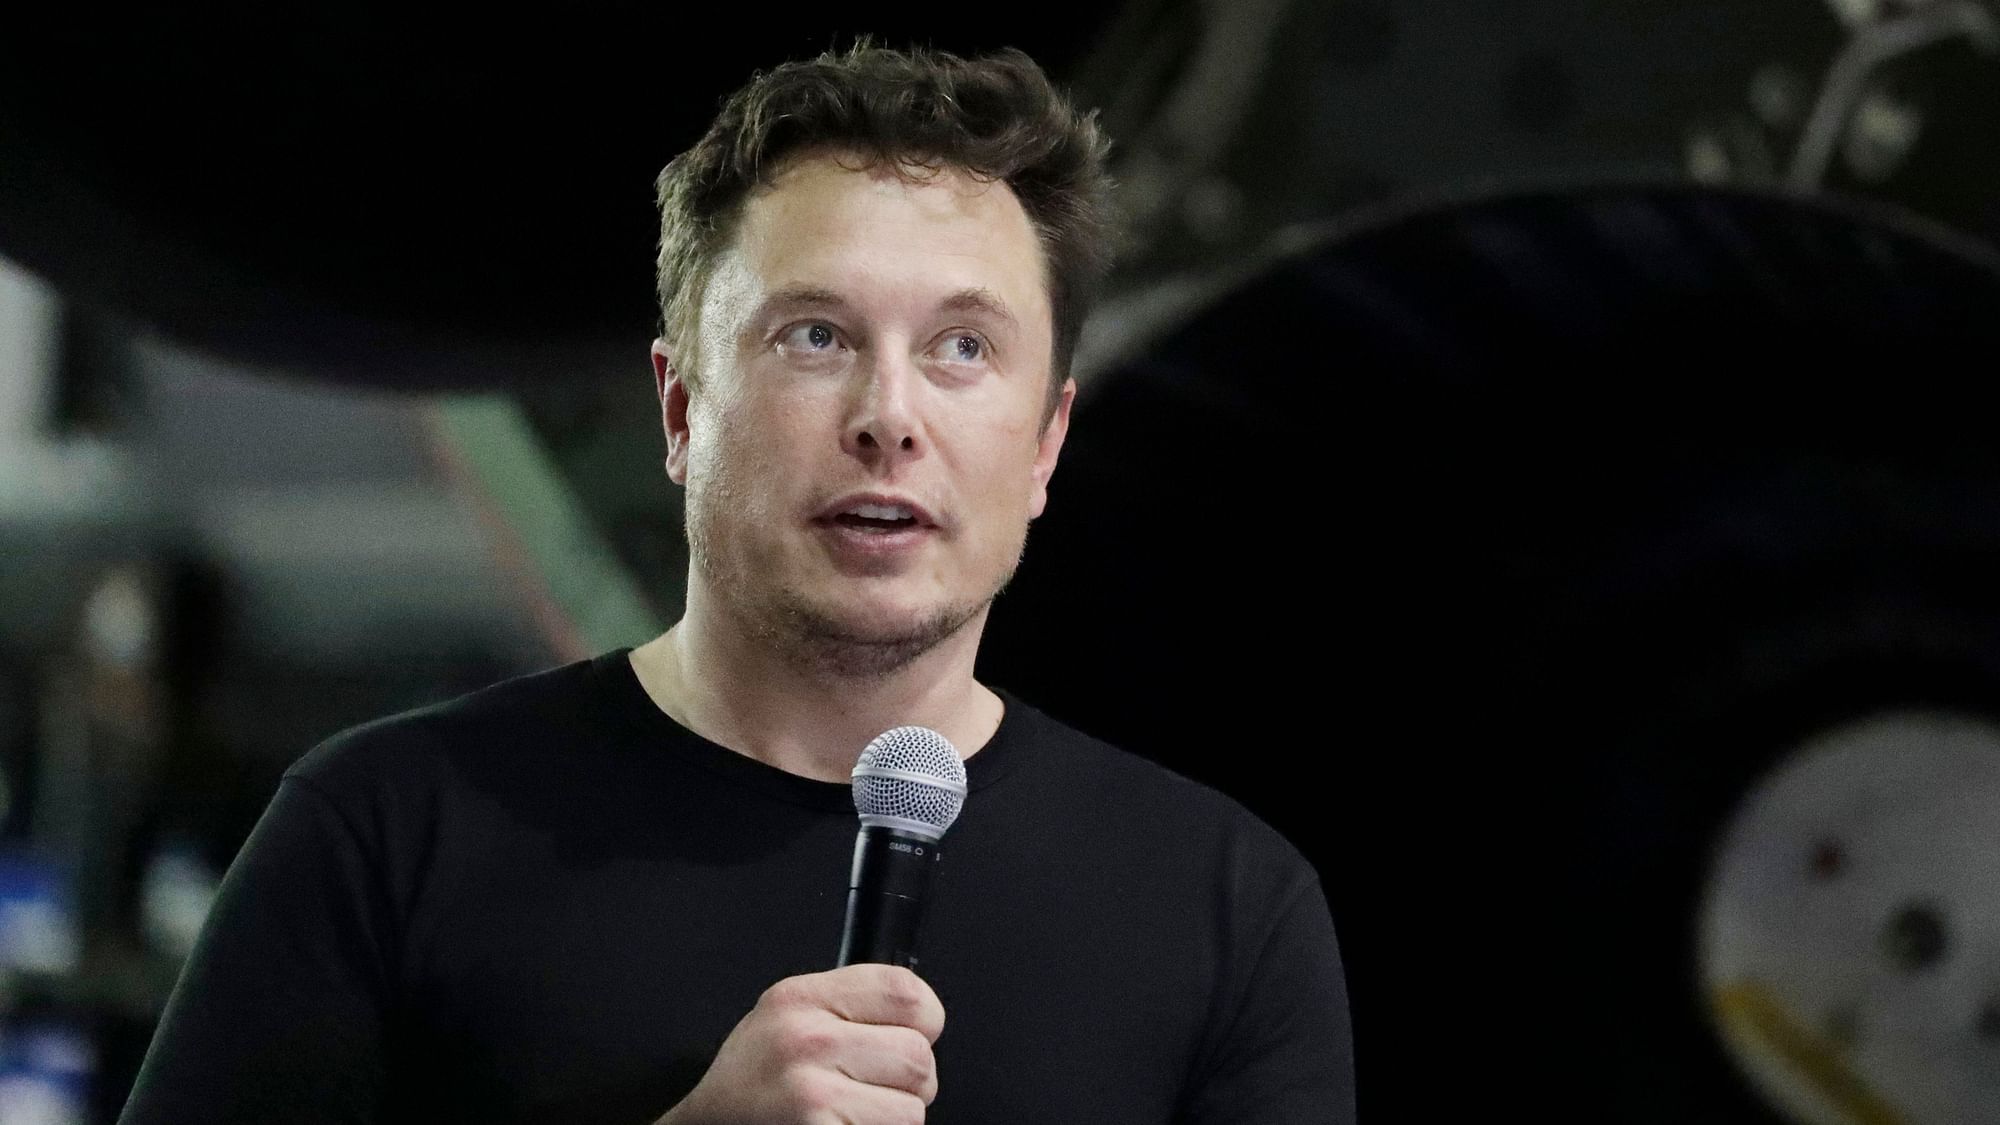 <div class="paragraphs"><p>File image of Tesla CEO Elon Musk.</p></div>